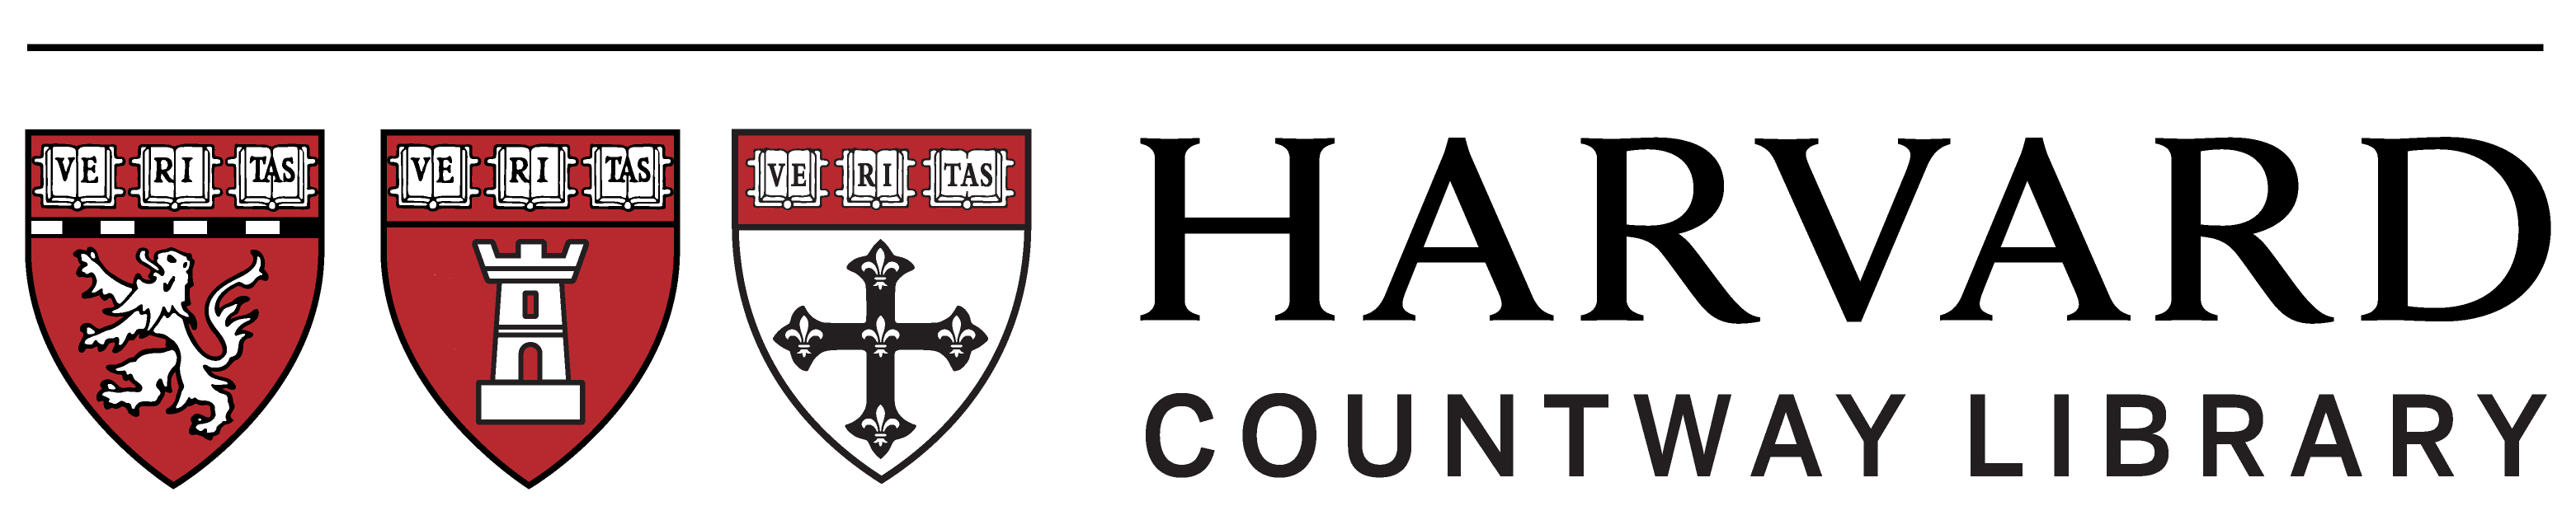 Countway Library Logo